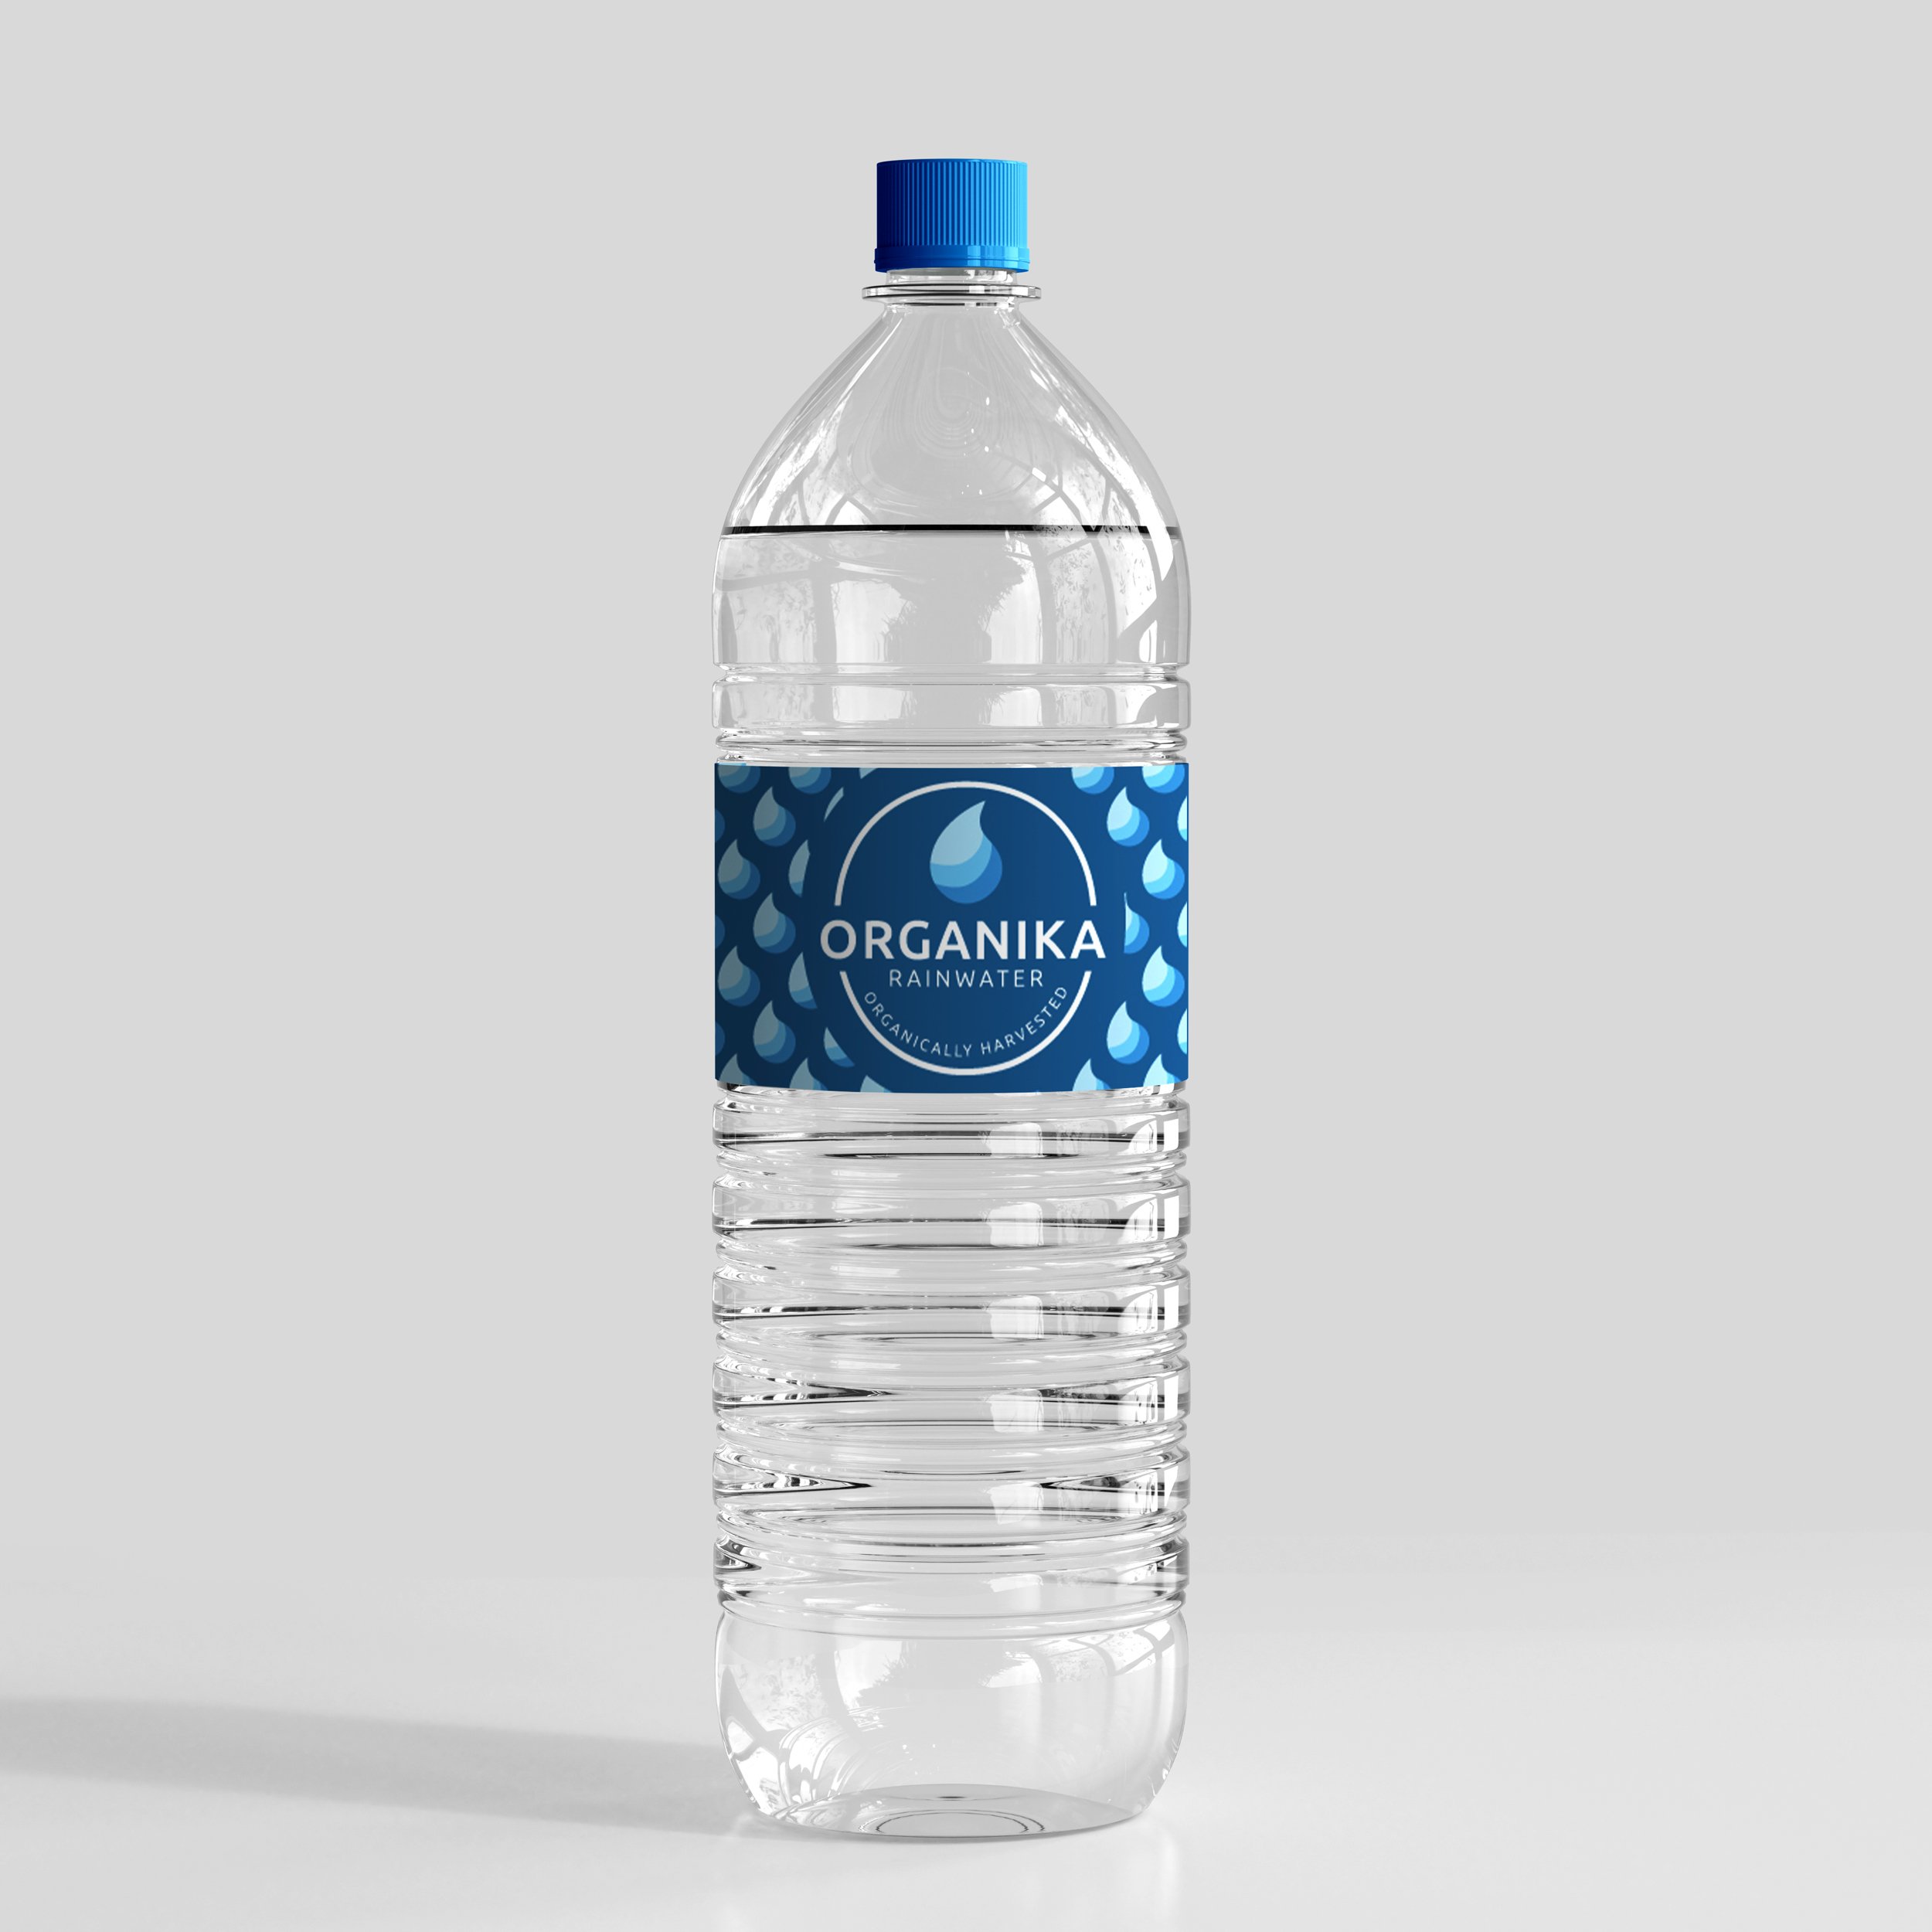 Organika-Rainwater-Bottle-Label-Mockup.jpg